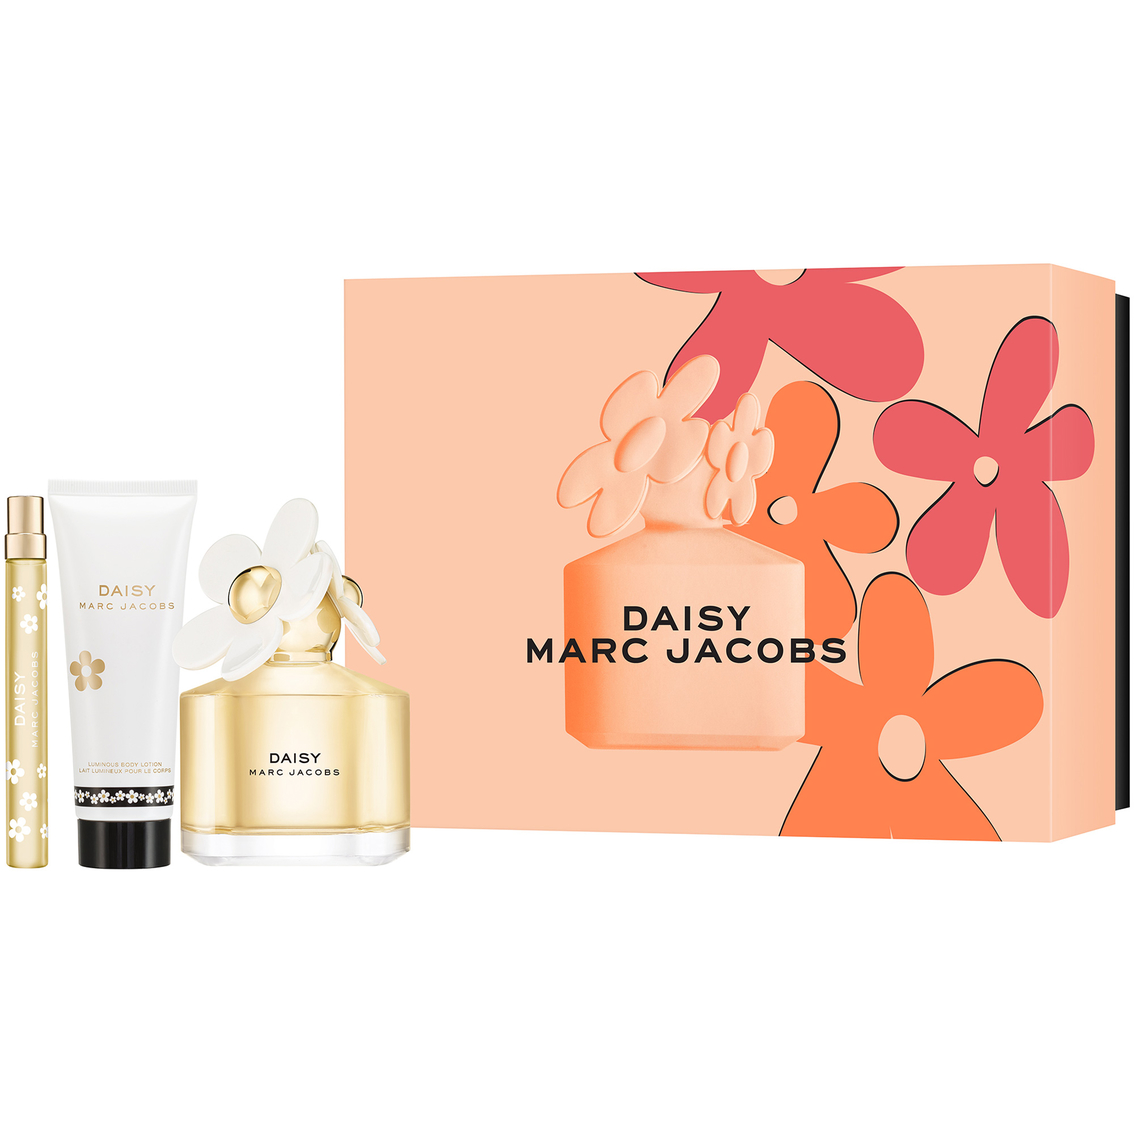 Marc Jacobs Daisy Eau De Toilette 3pc. Gift Set | Gifts Sets For Her ...